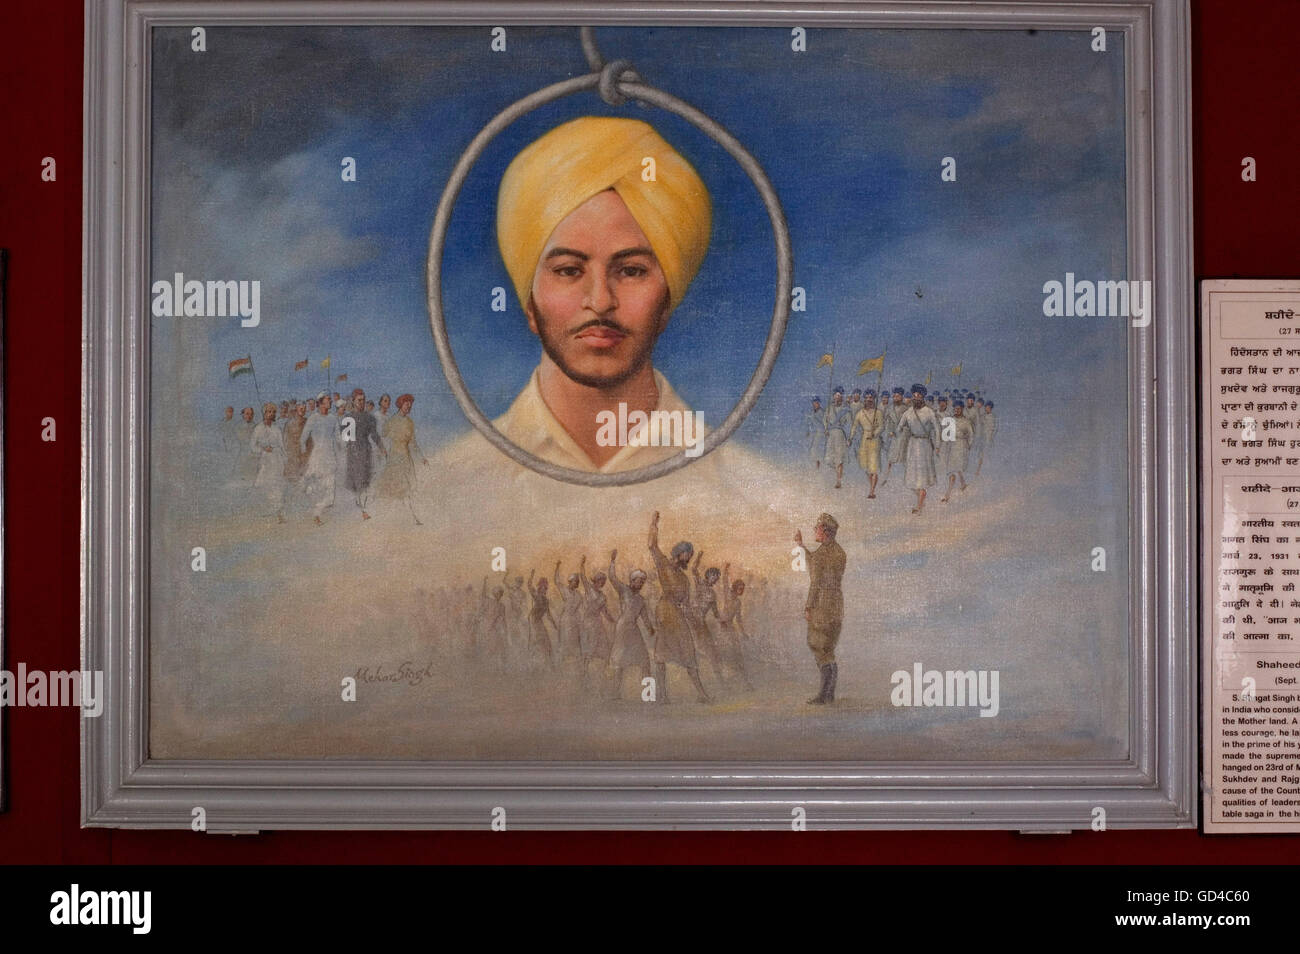 Bhagat Singh Foto de stock